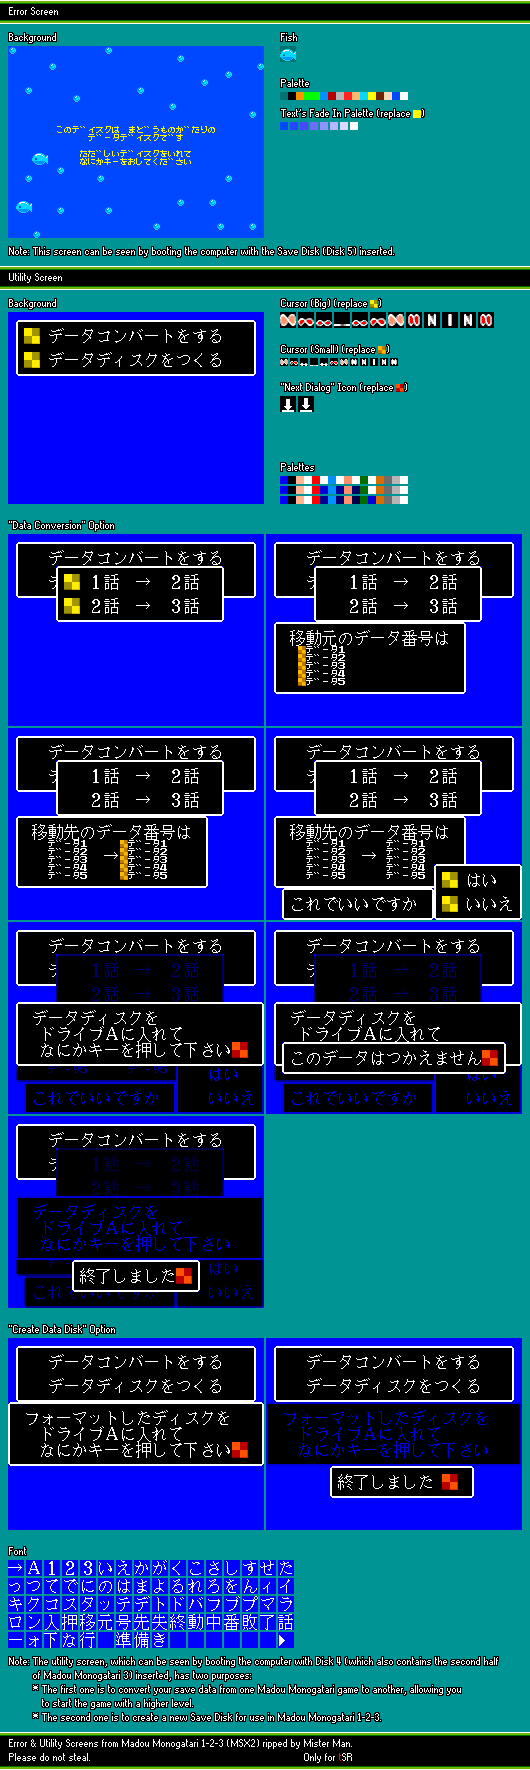 Madou Monogatari 1 (MSX2) - Error & Utility Screens